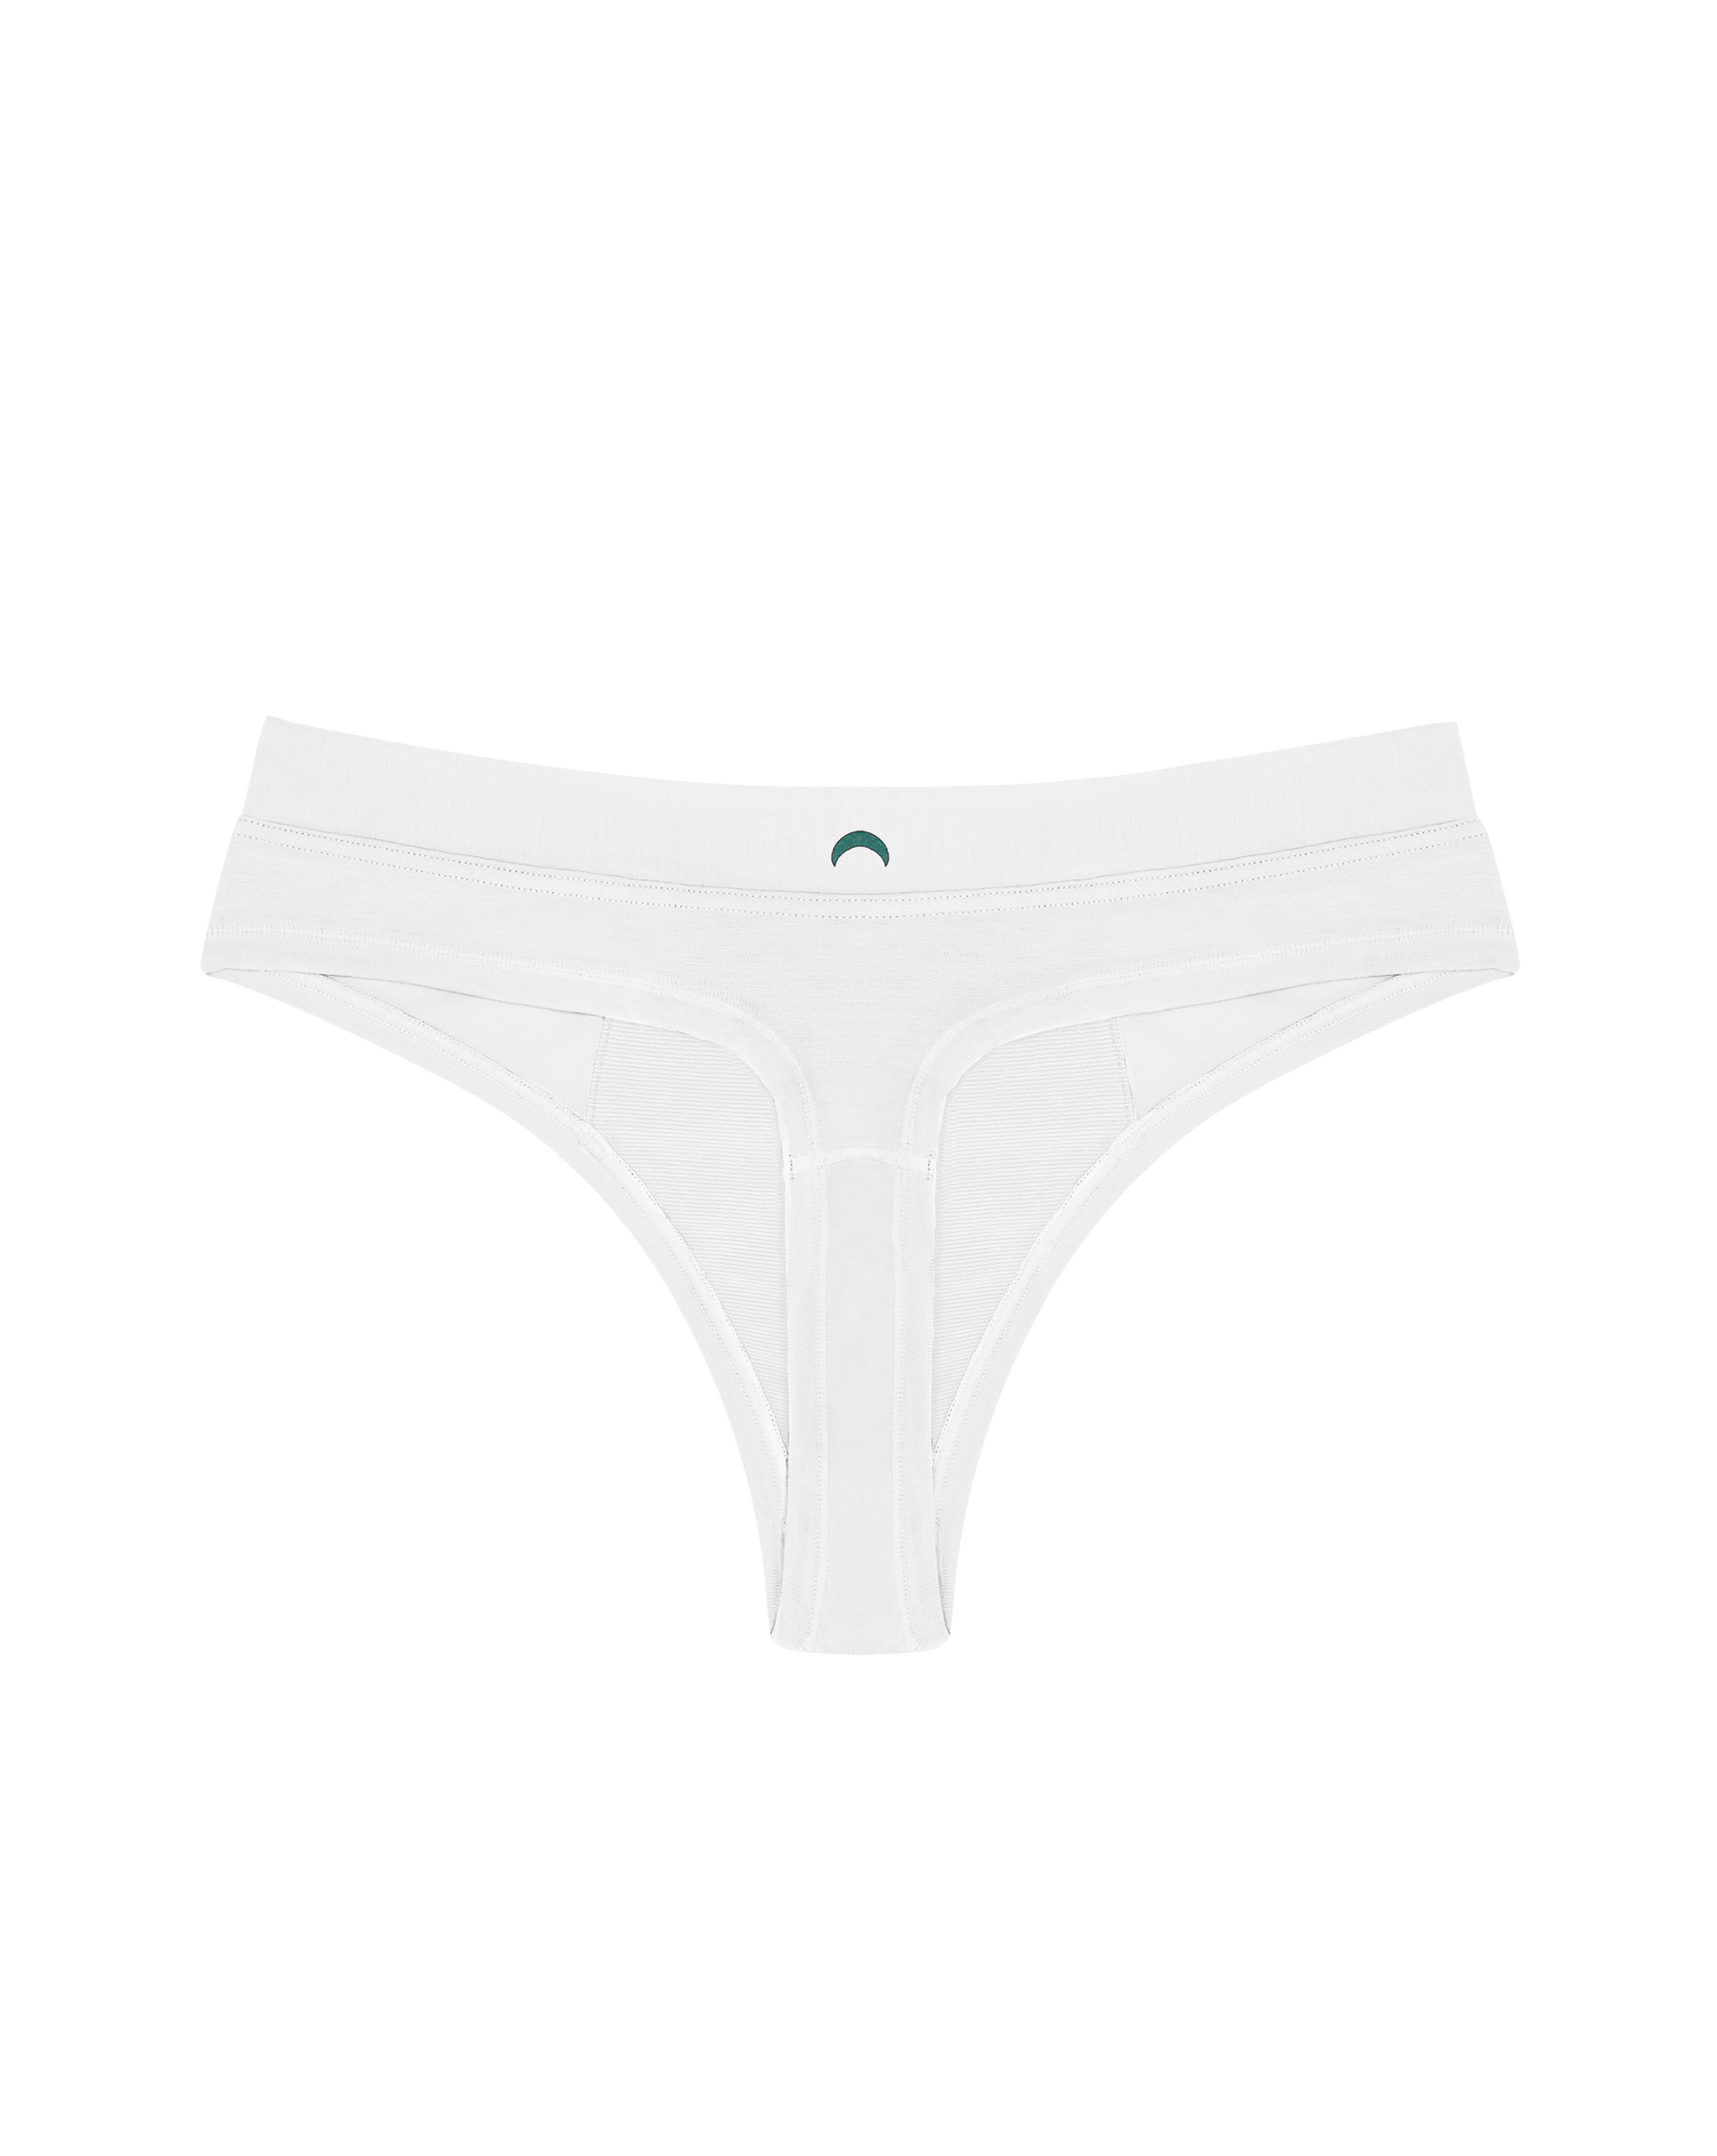 Clearance – huha underwear